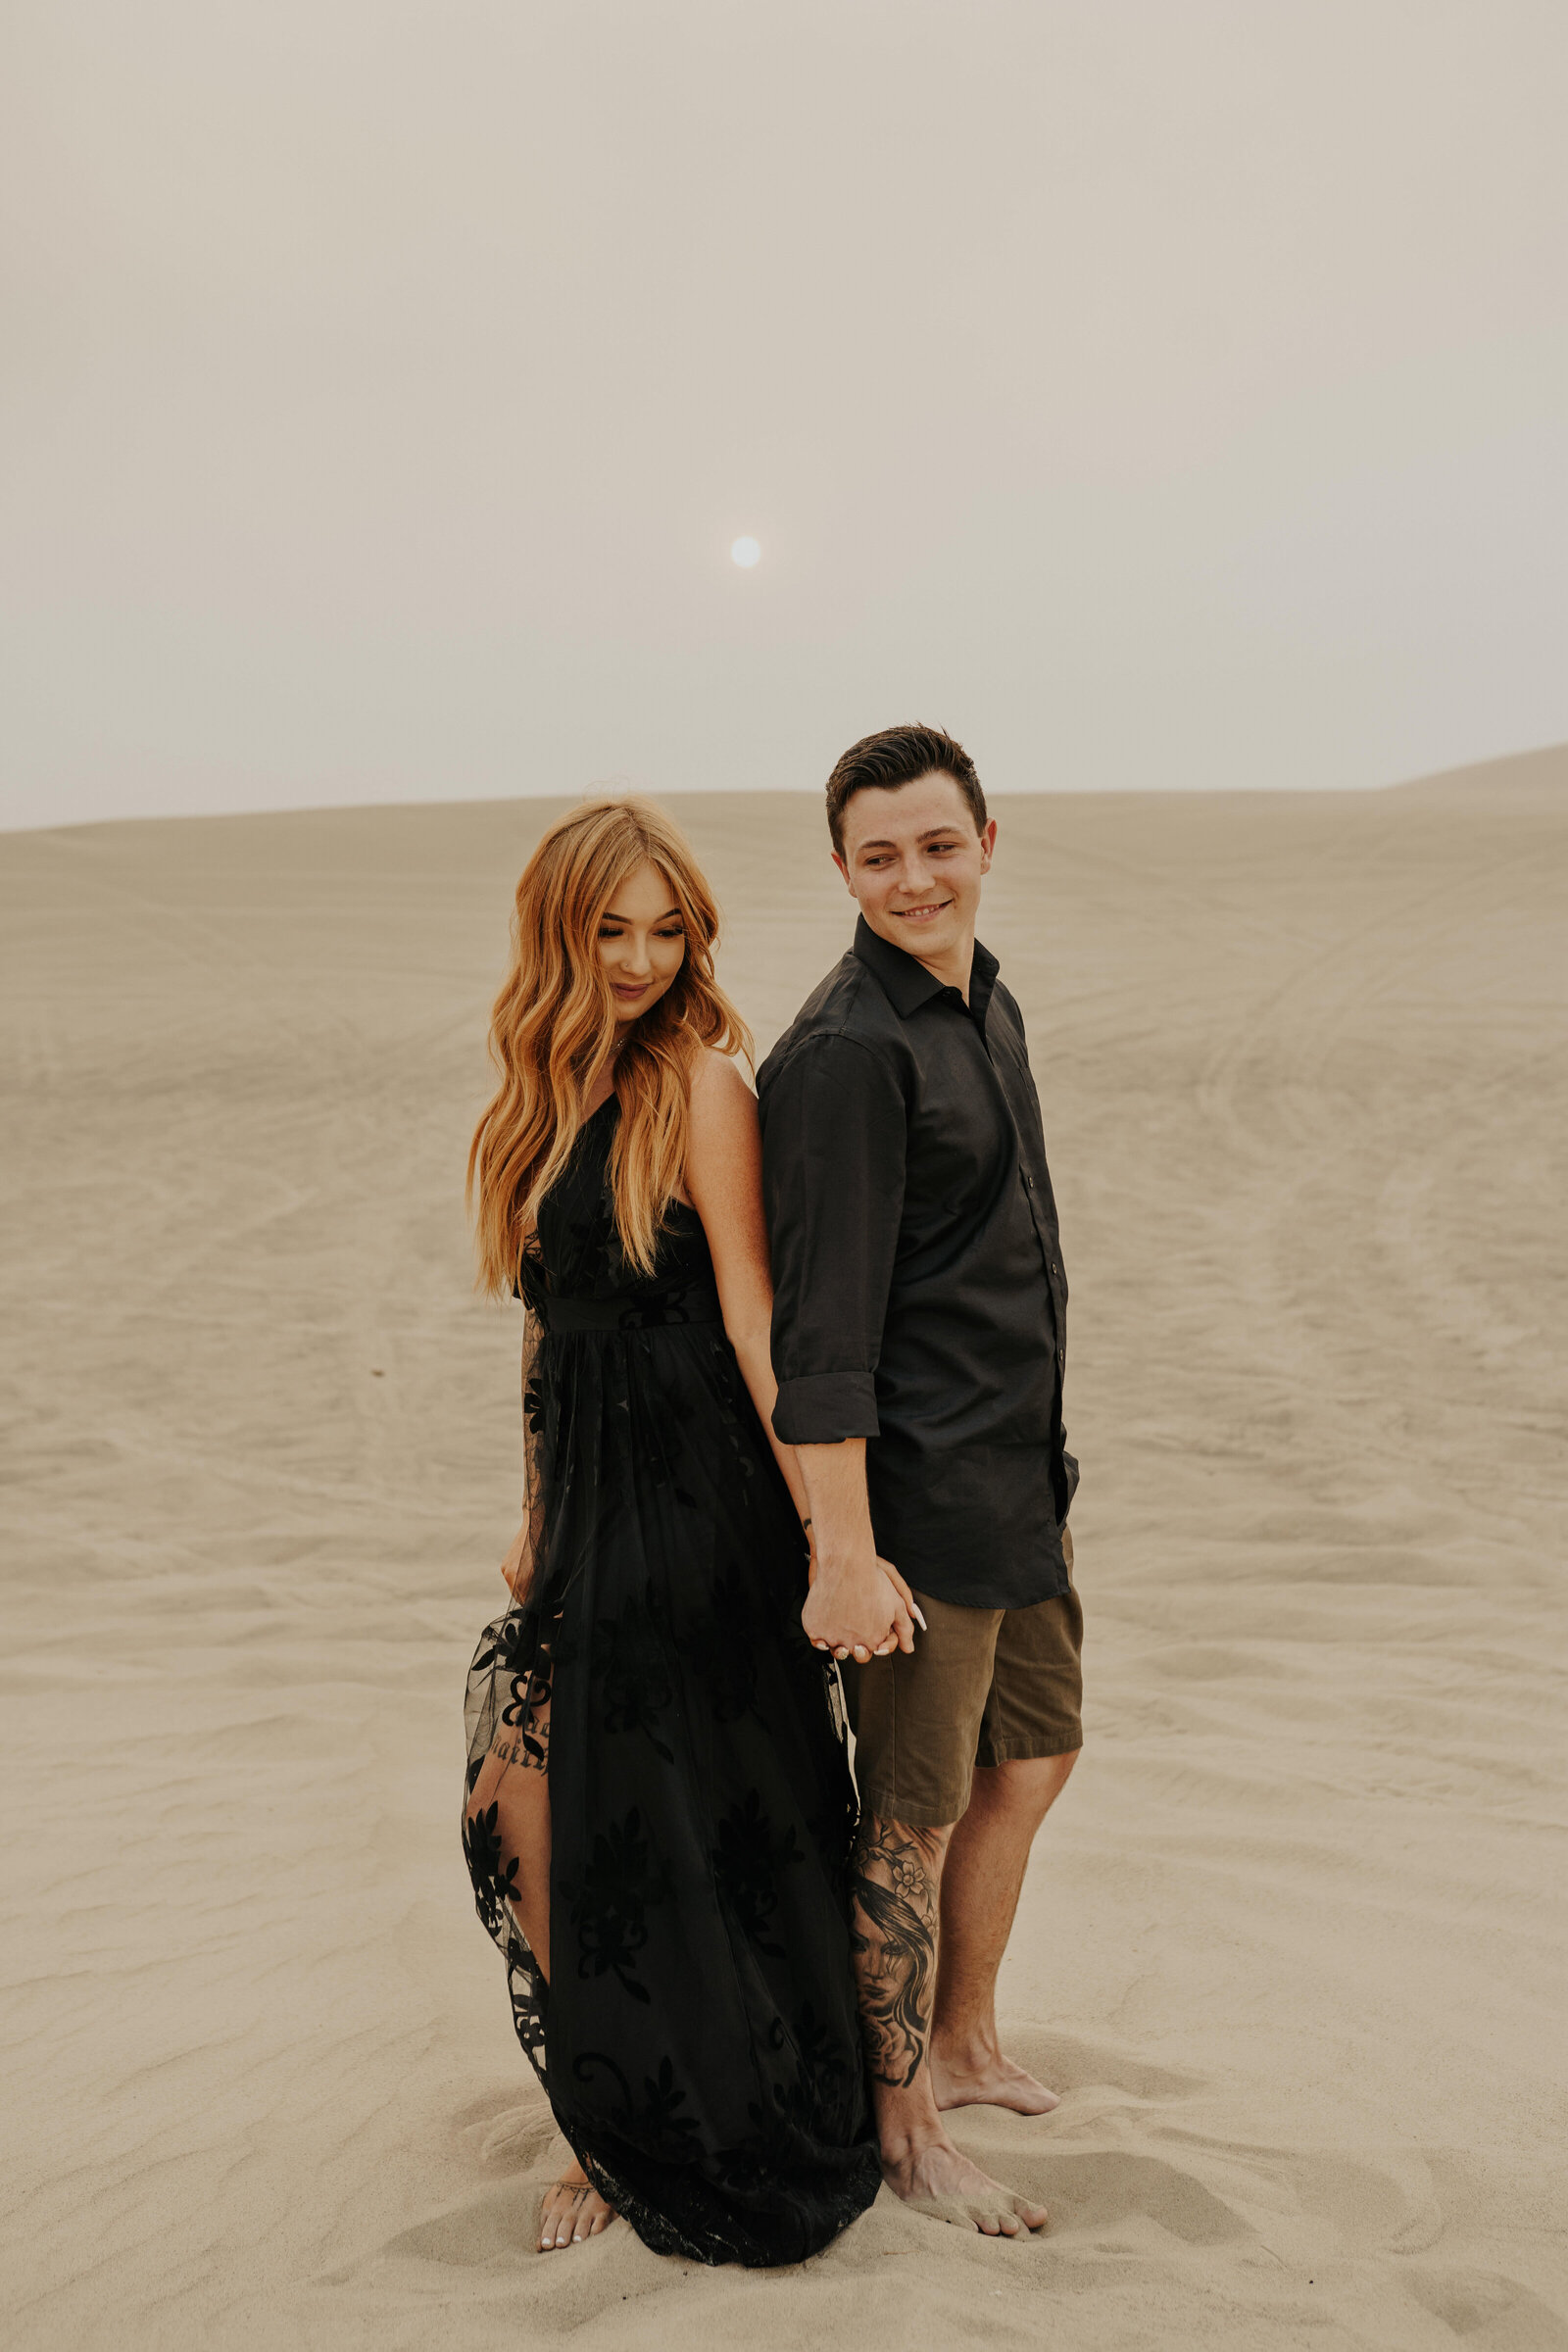 Sand Dunes Couples Photos - Raquel King Photography22